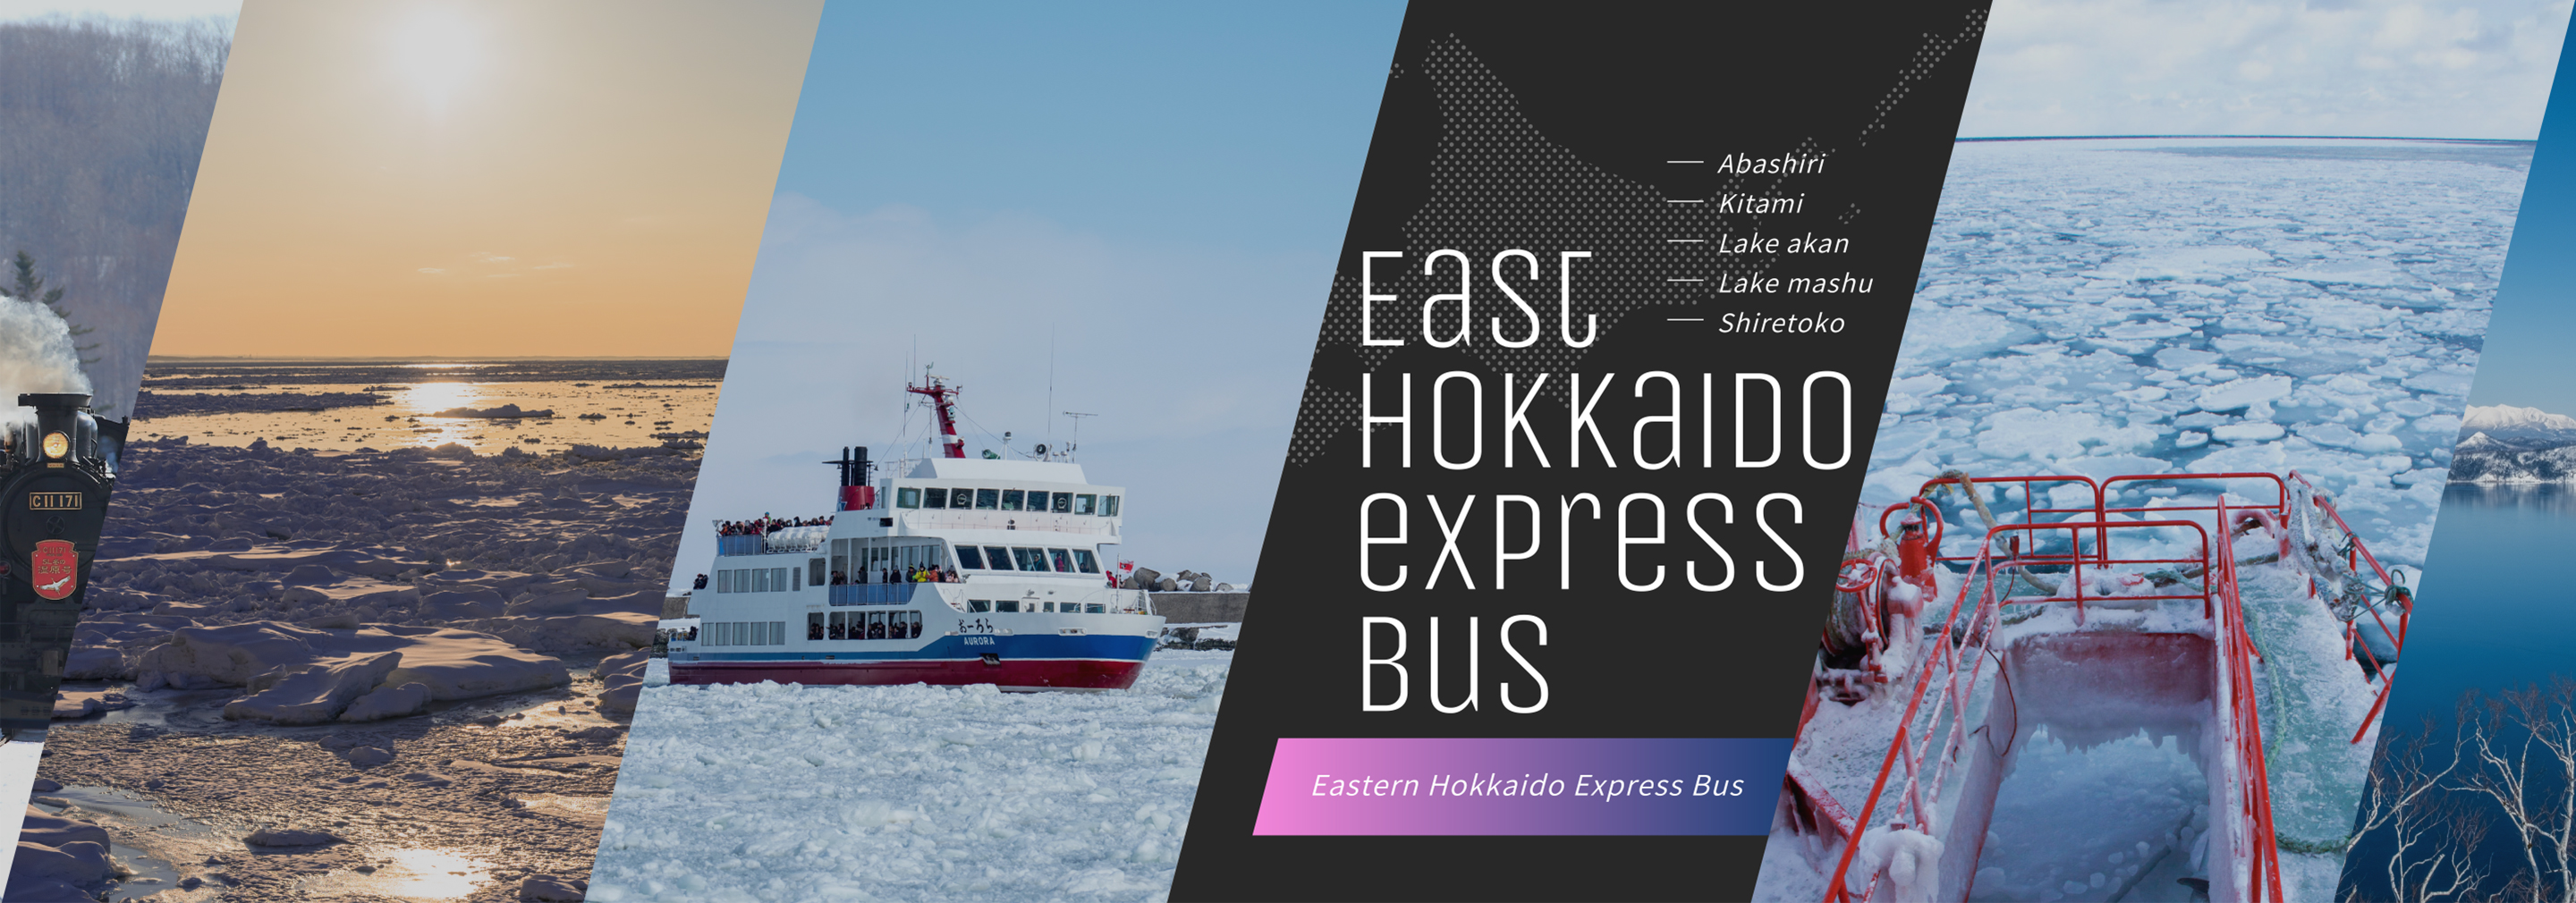 Abashiri Kitami Lake Akan Lake Mashu Shiretoko Utoro East Hokkaido express Bus